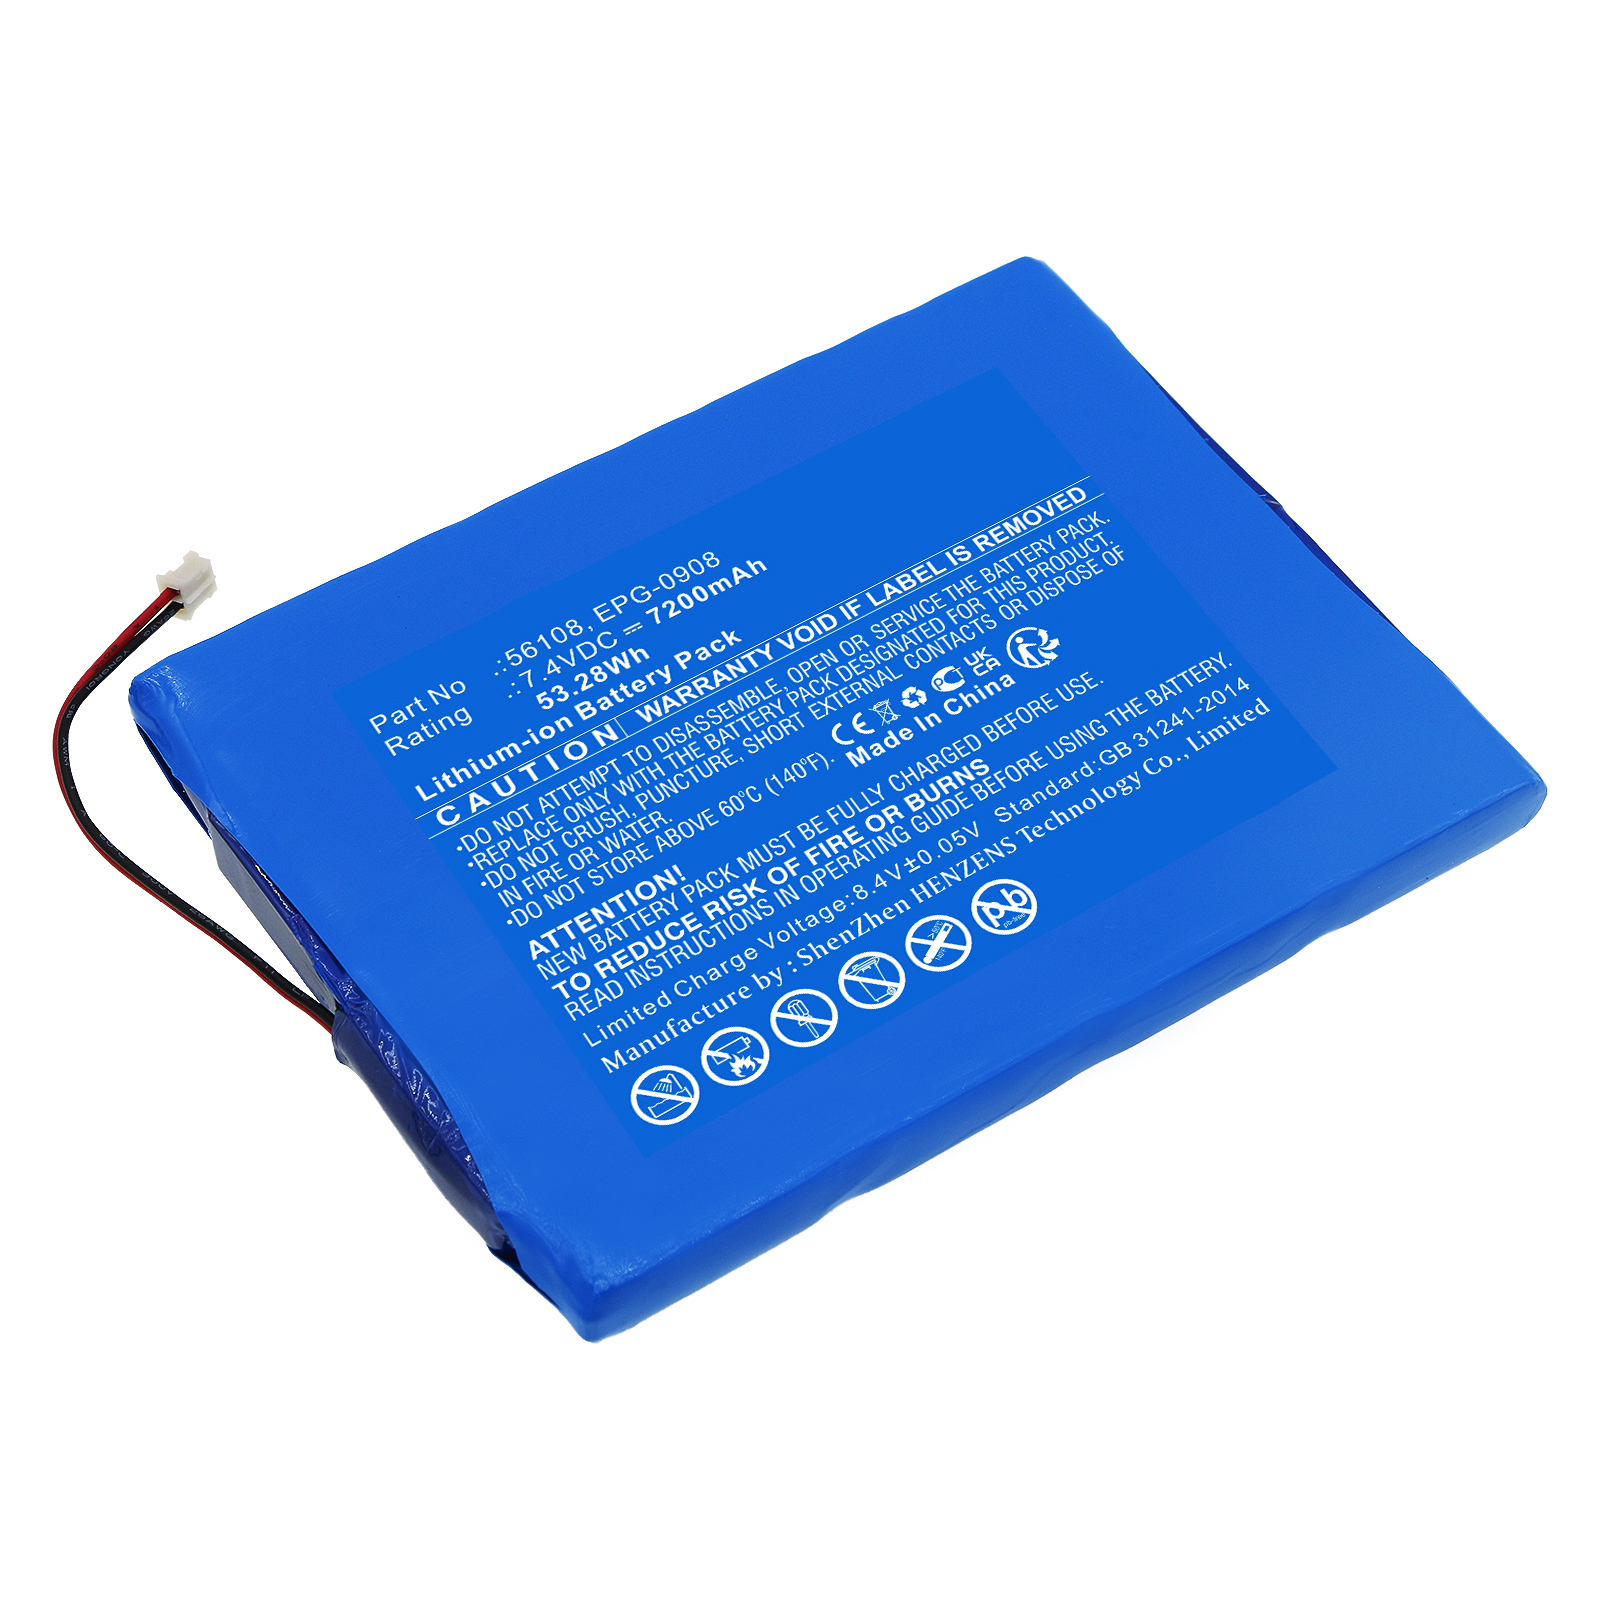 Synergy Digital Equipment Battery, Compatible with Trimble EPG-0908 Equipment Battery (Li-ion, 7.4V, 7200mAh)